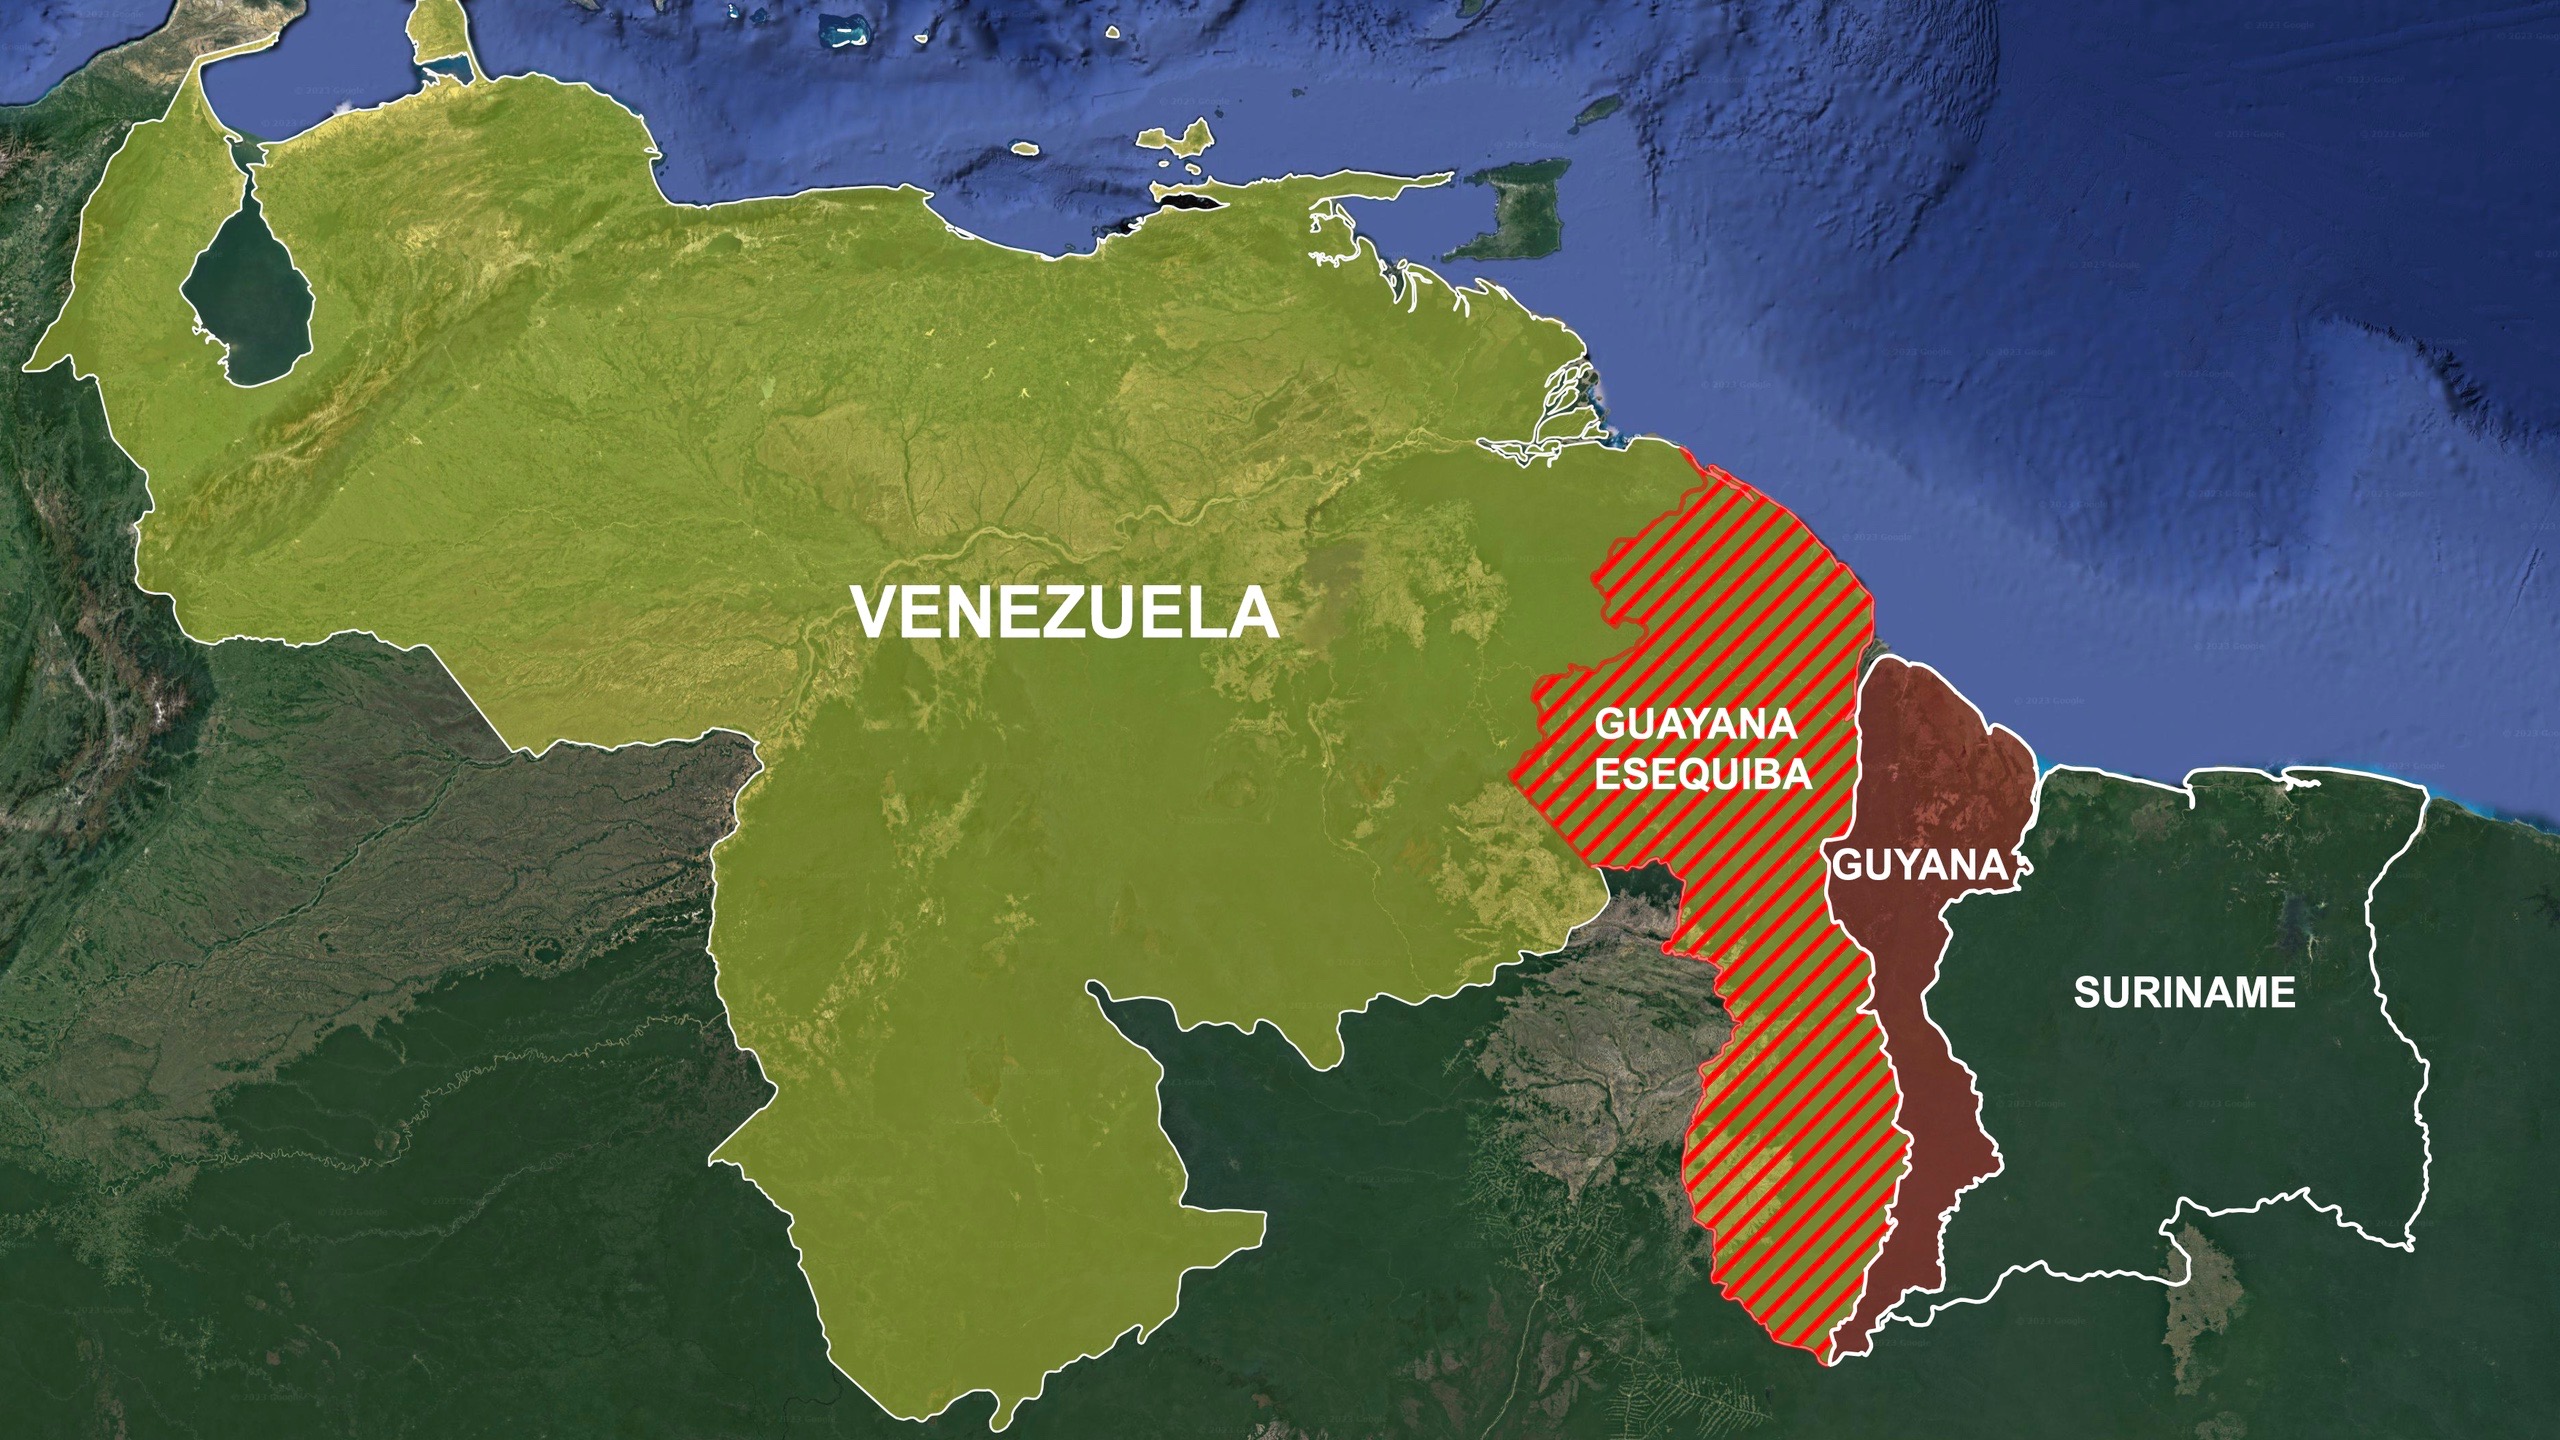 Venezuela Guyana Essequibo dispute